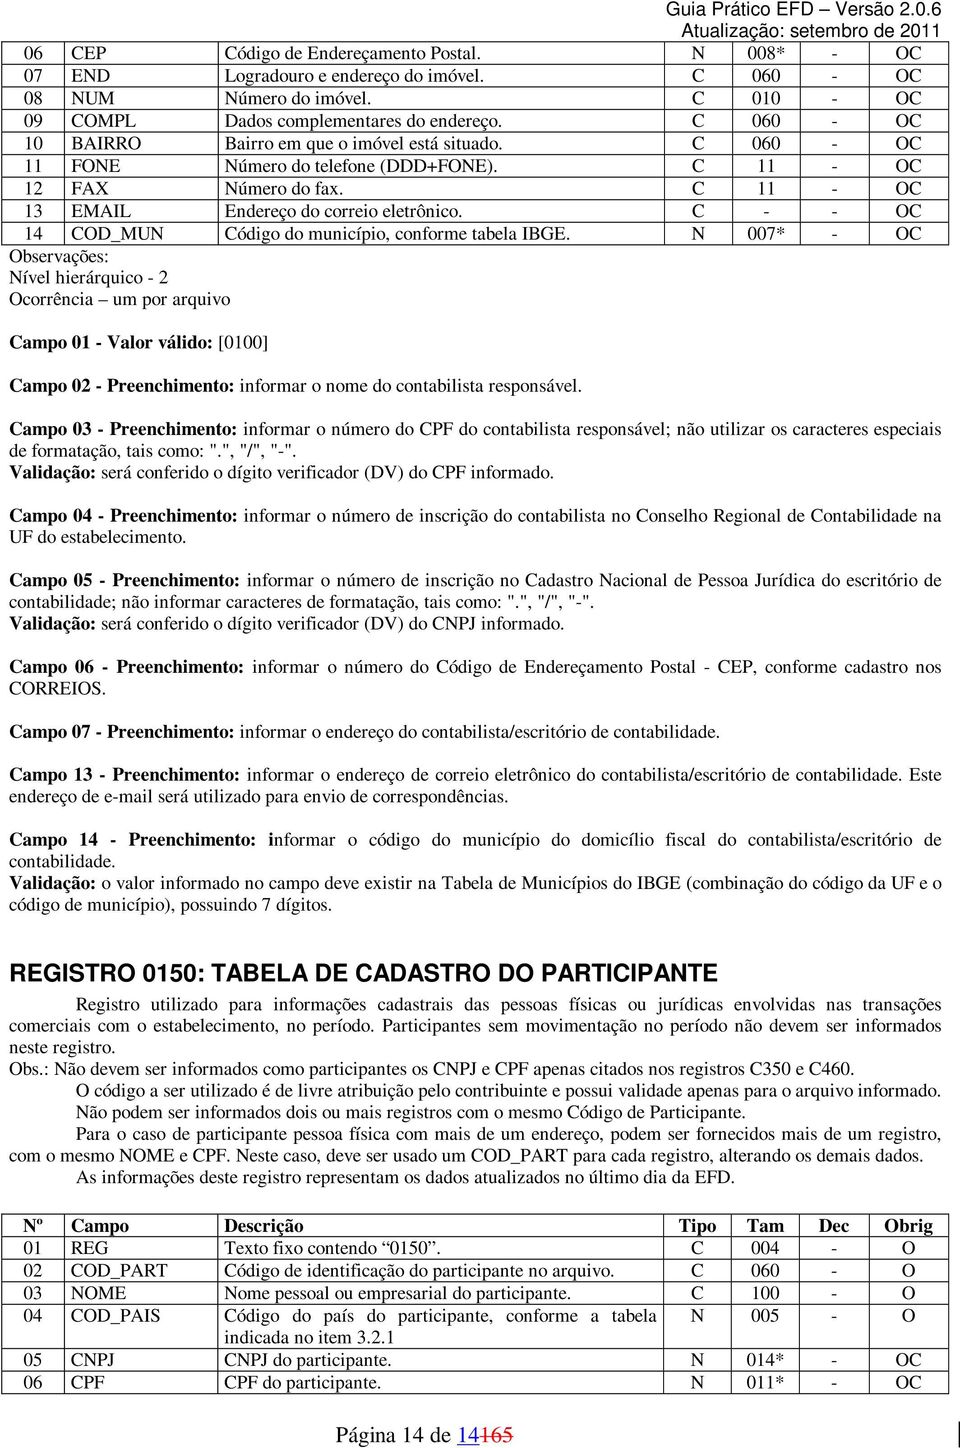 C - - OC 14 COD_MUN Código do município, conforme tabela IBGE.